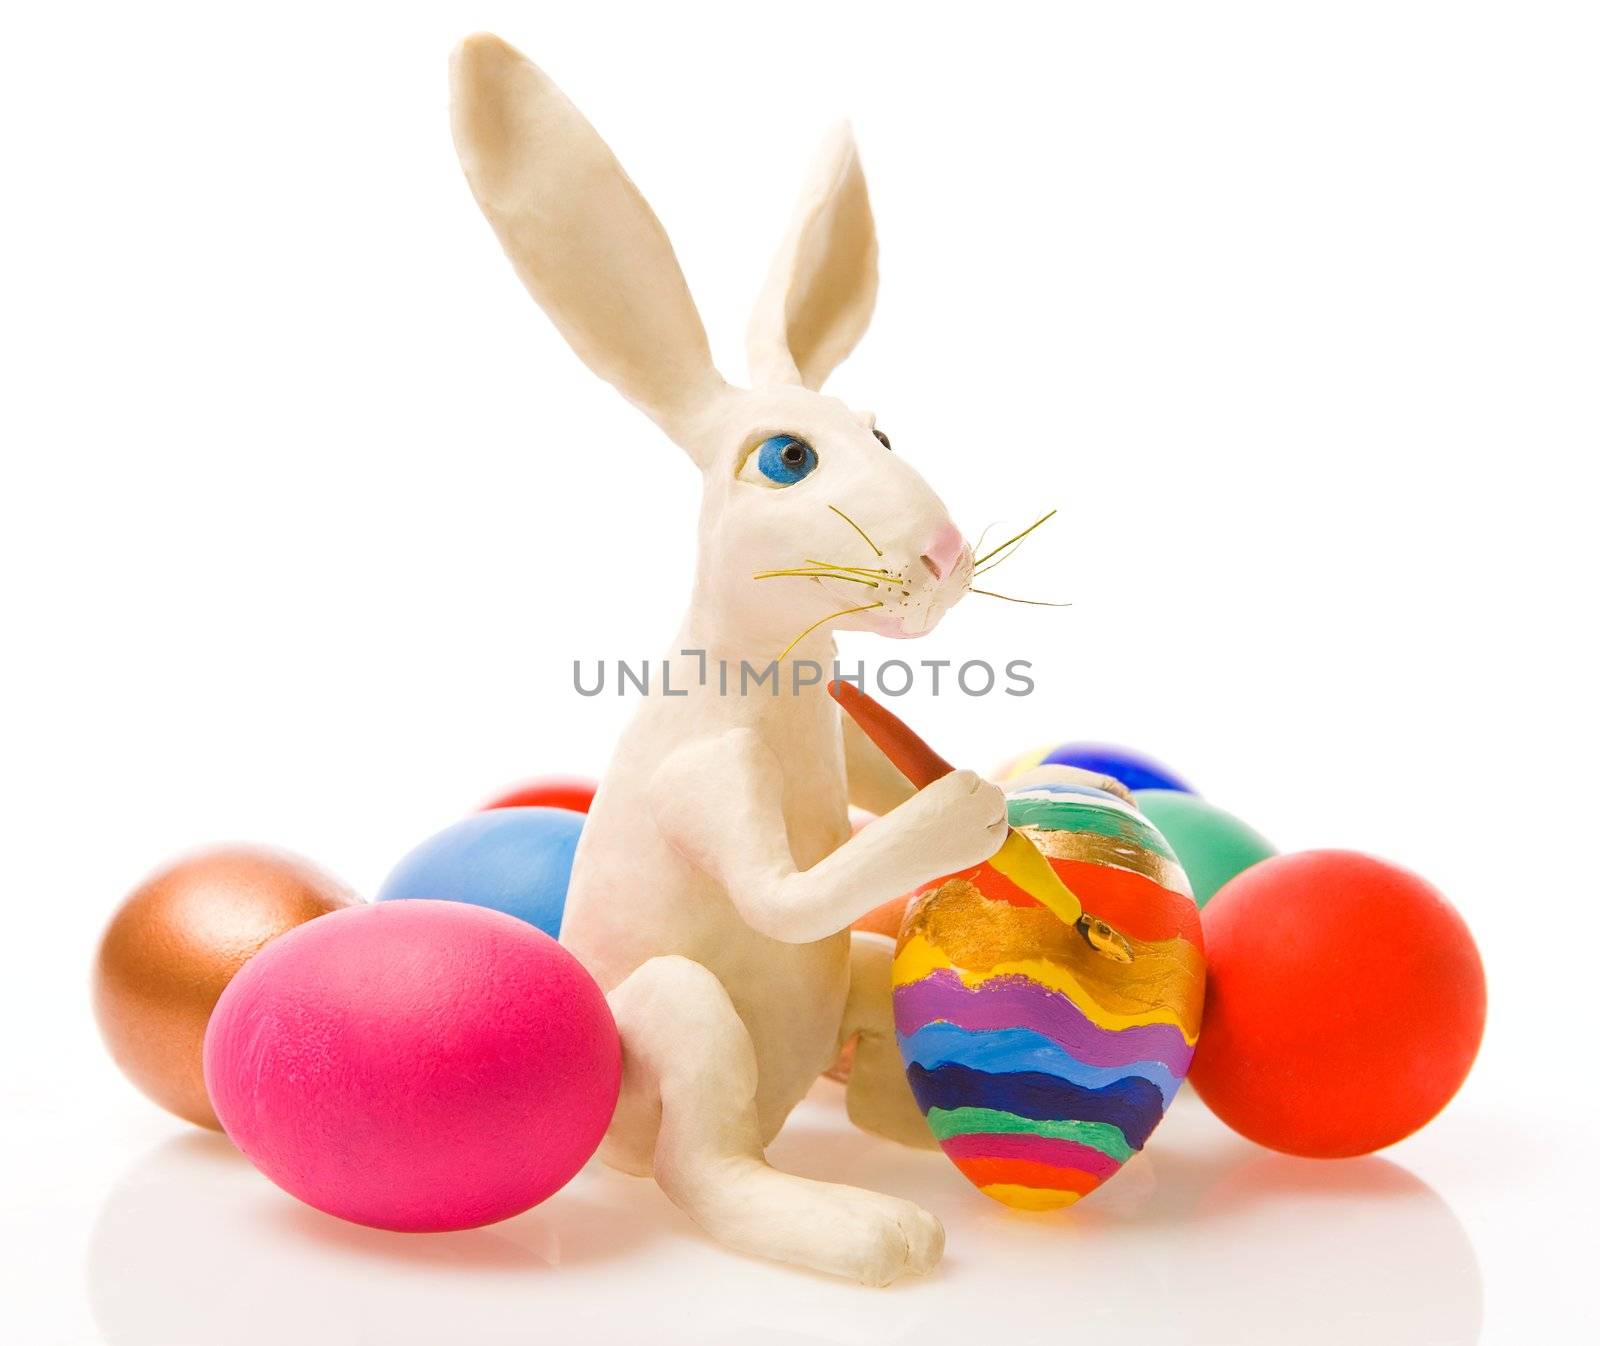 The white rabbit paints egg 
